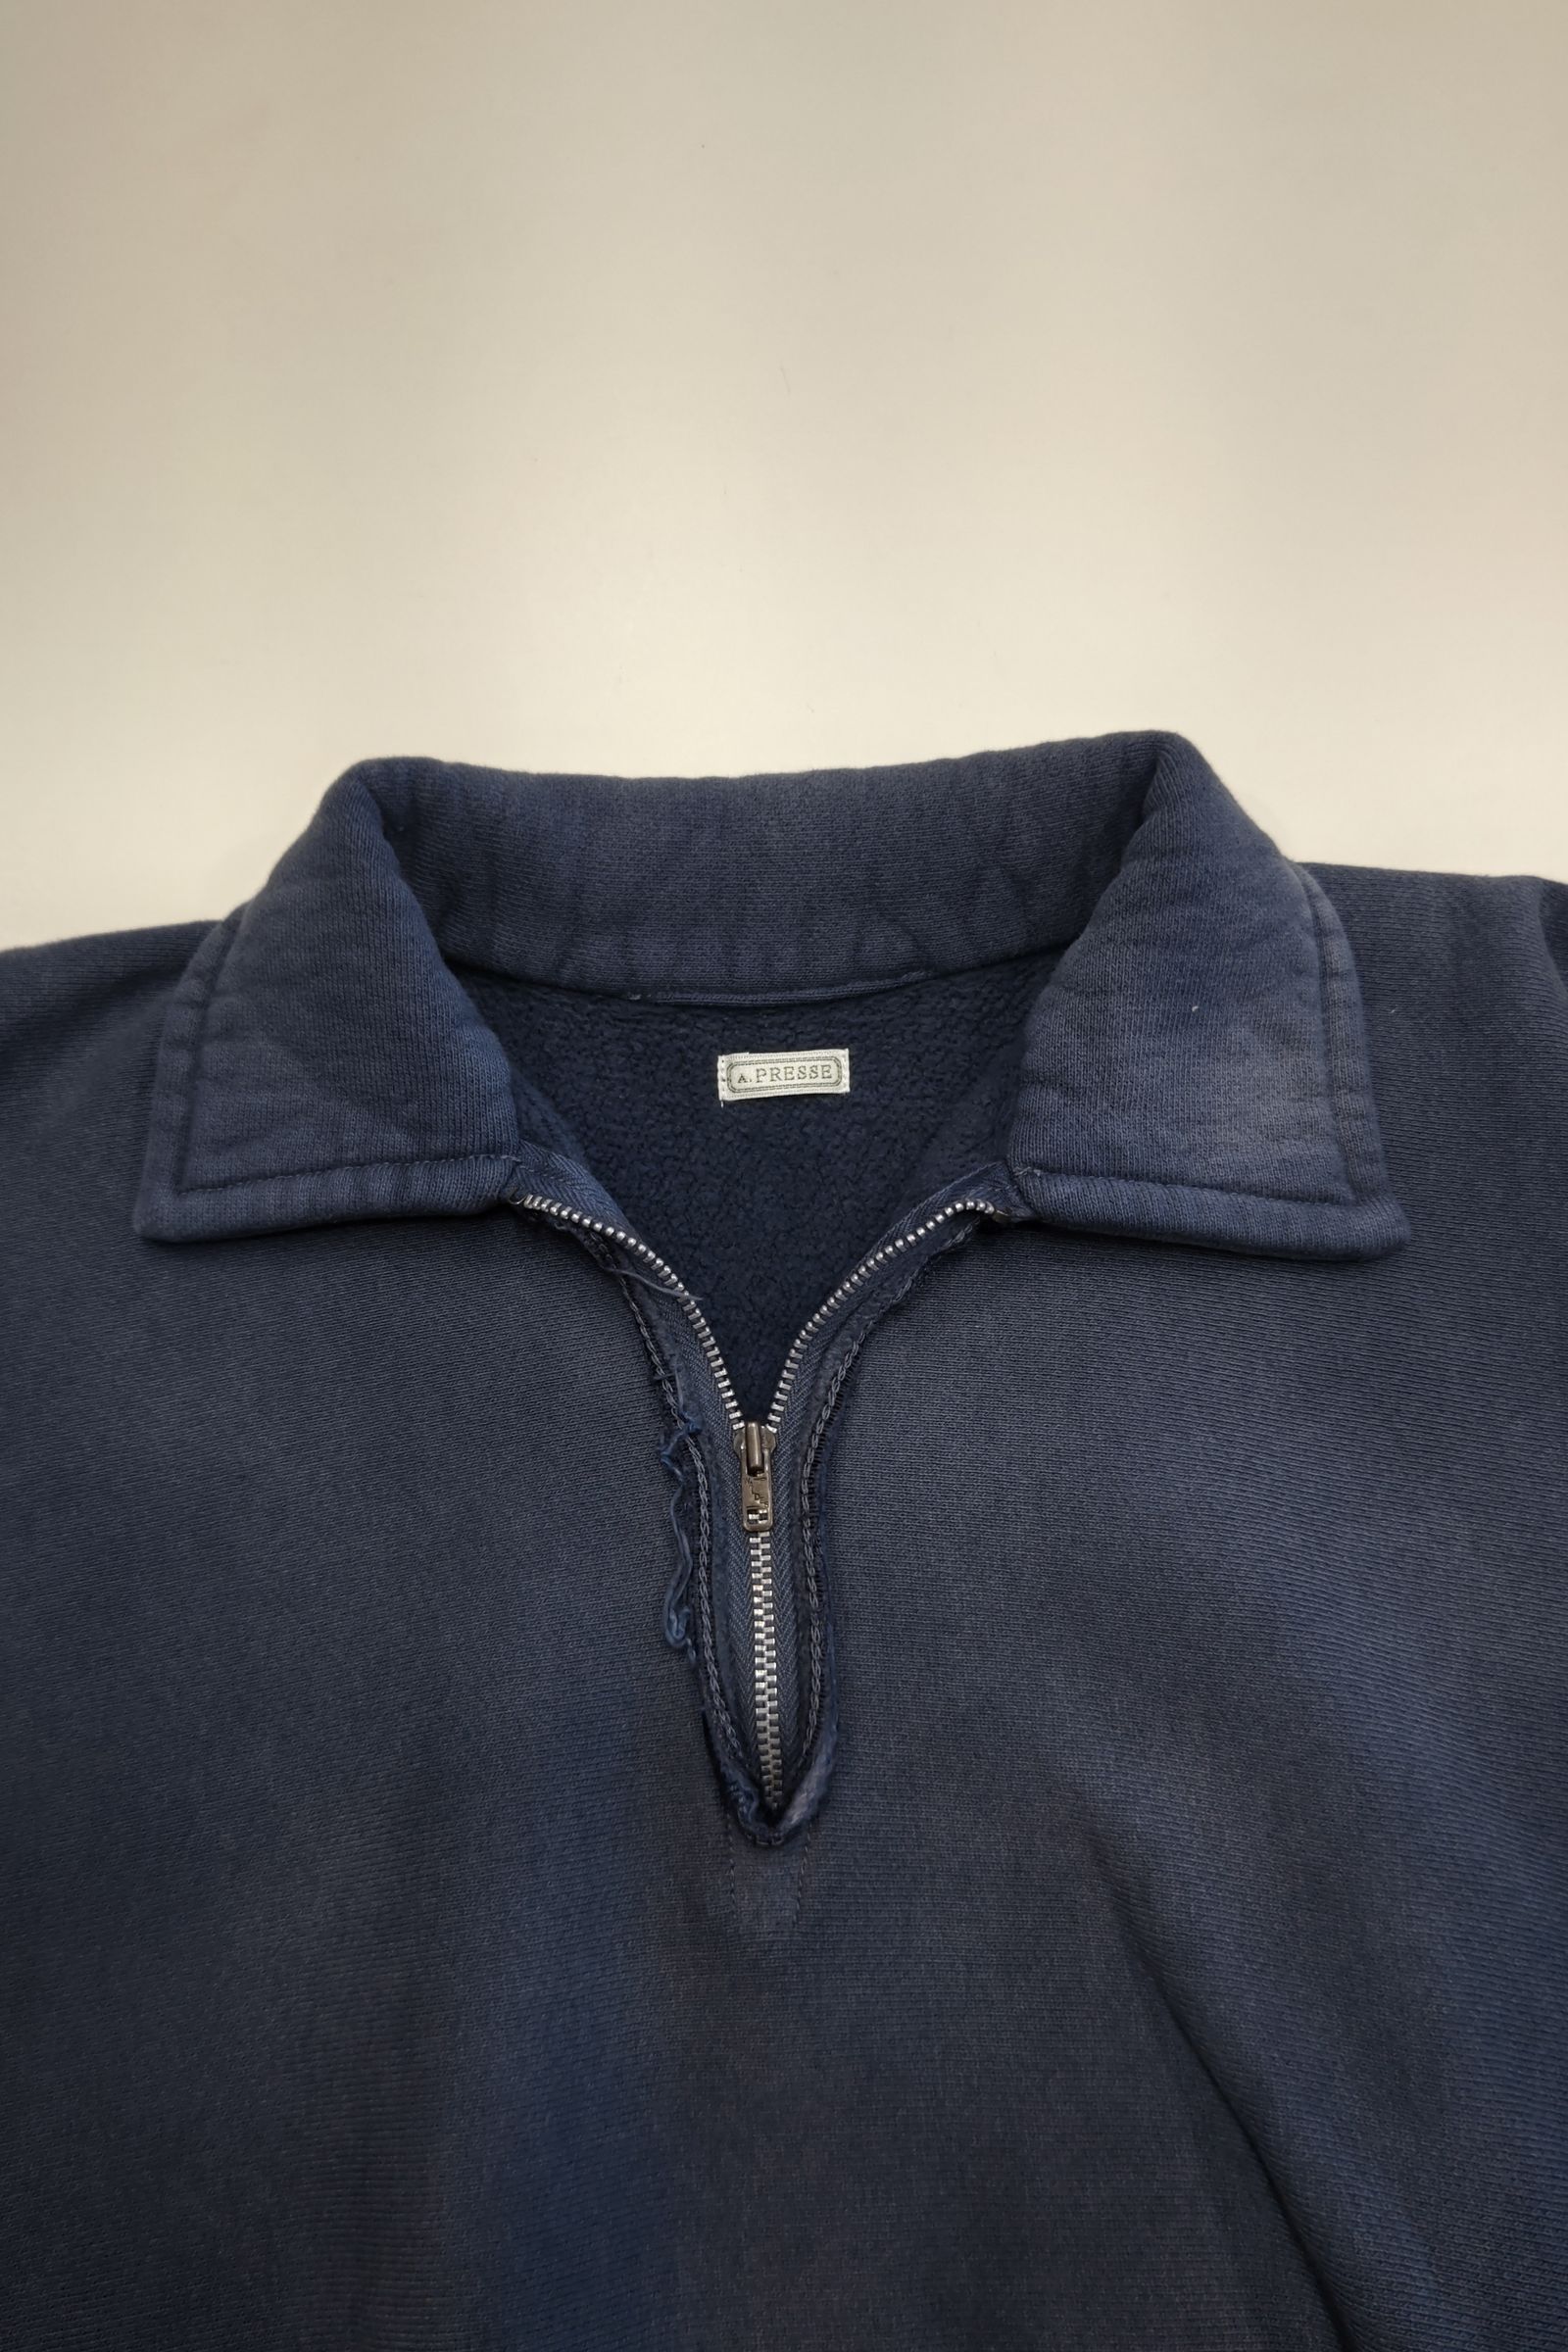 vintage half zip sweatshirts -navy- 22aw men 8月27日発売 - 3